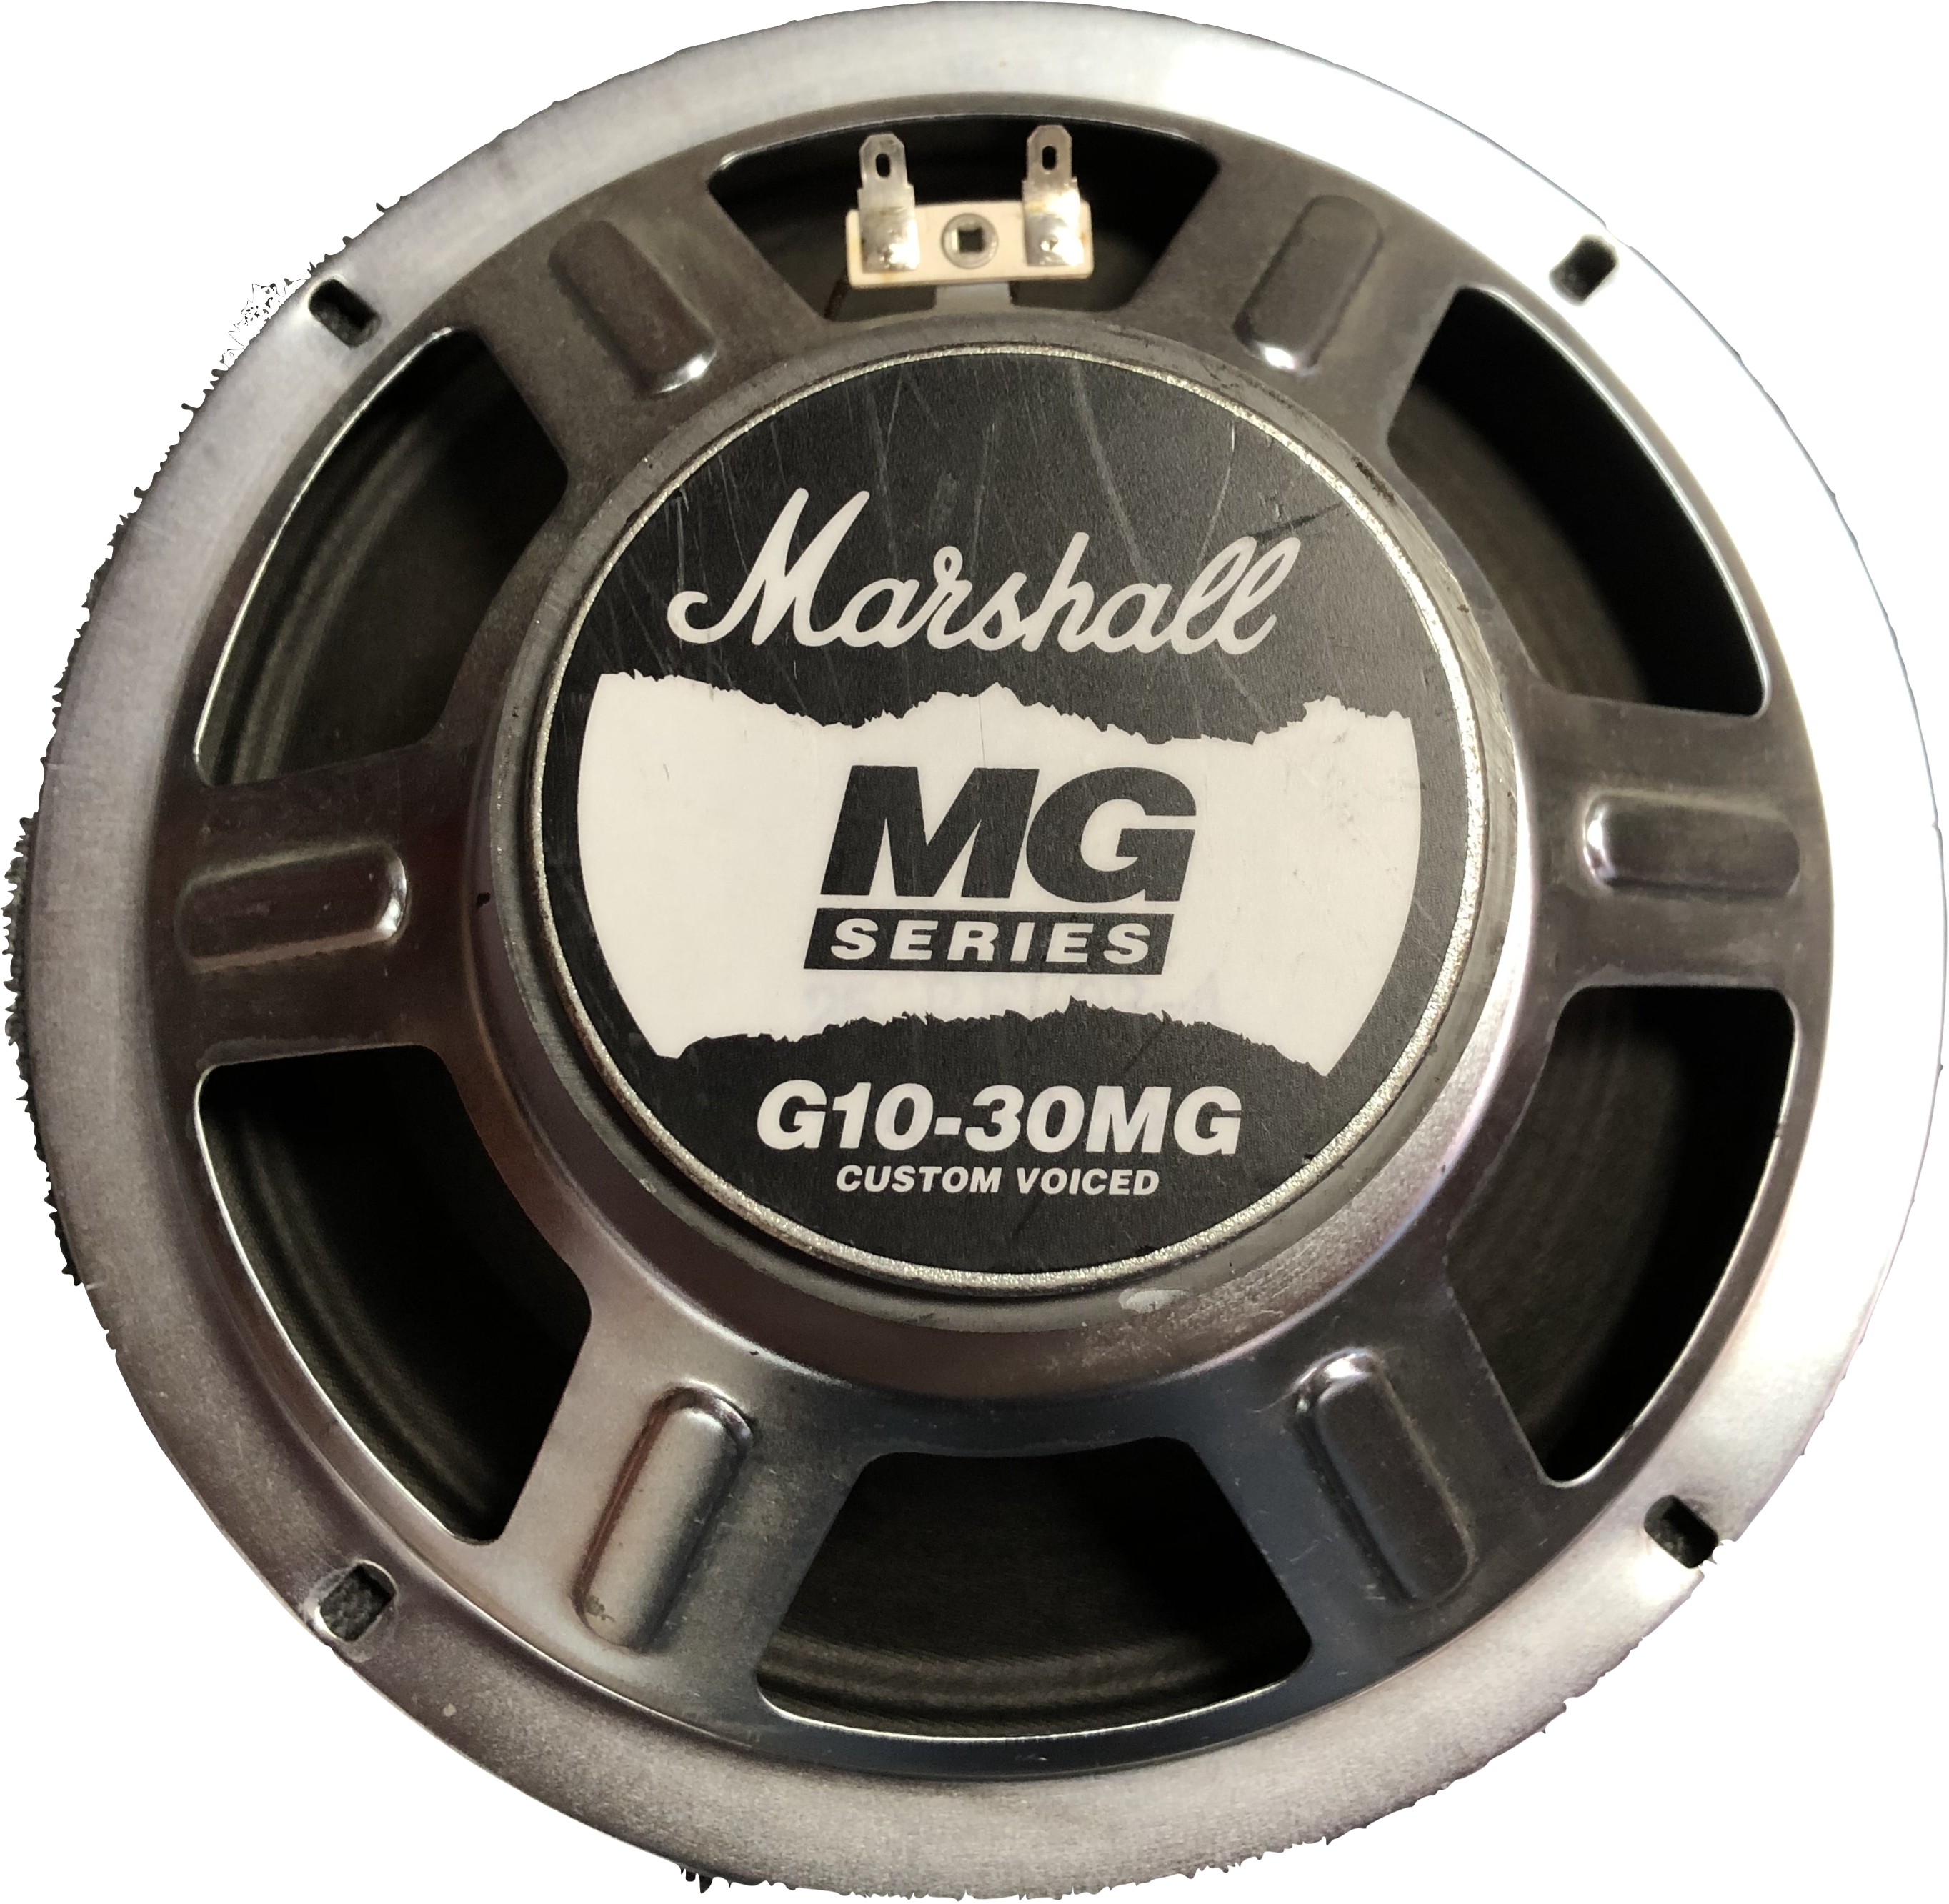 G10-30MG  ALTAVOZ ORIGINAL MARSHALL MG SERIES (DESPIECE)